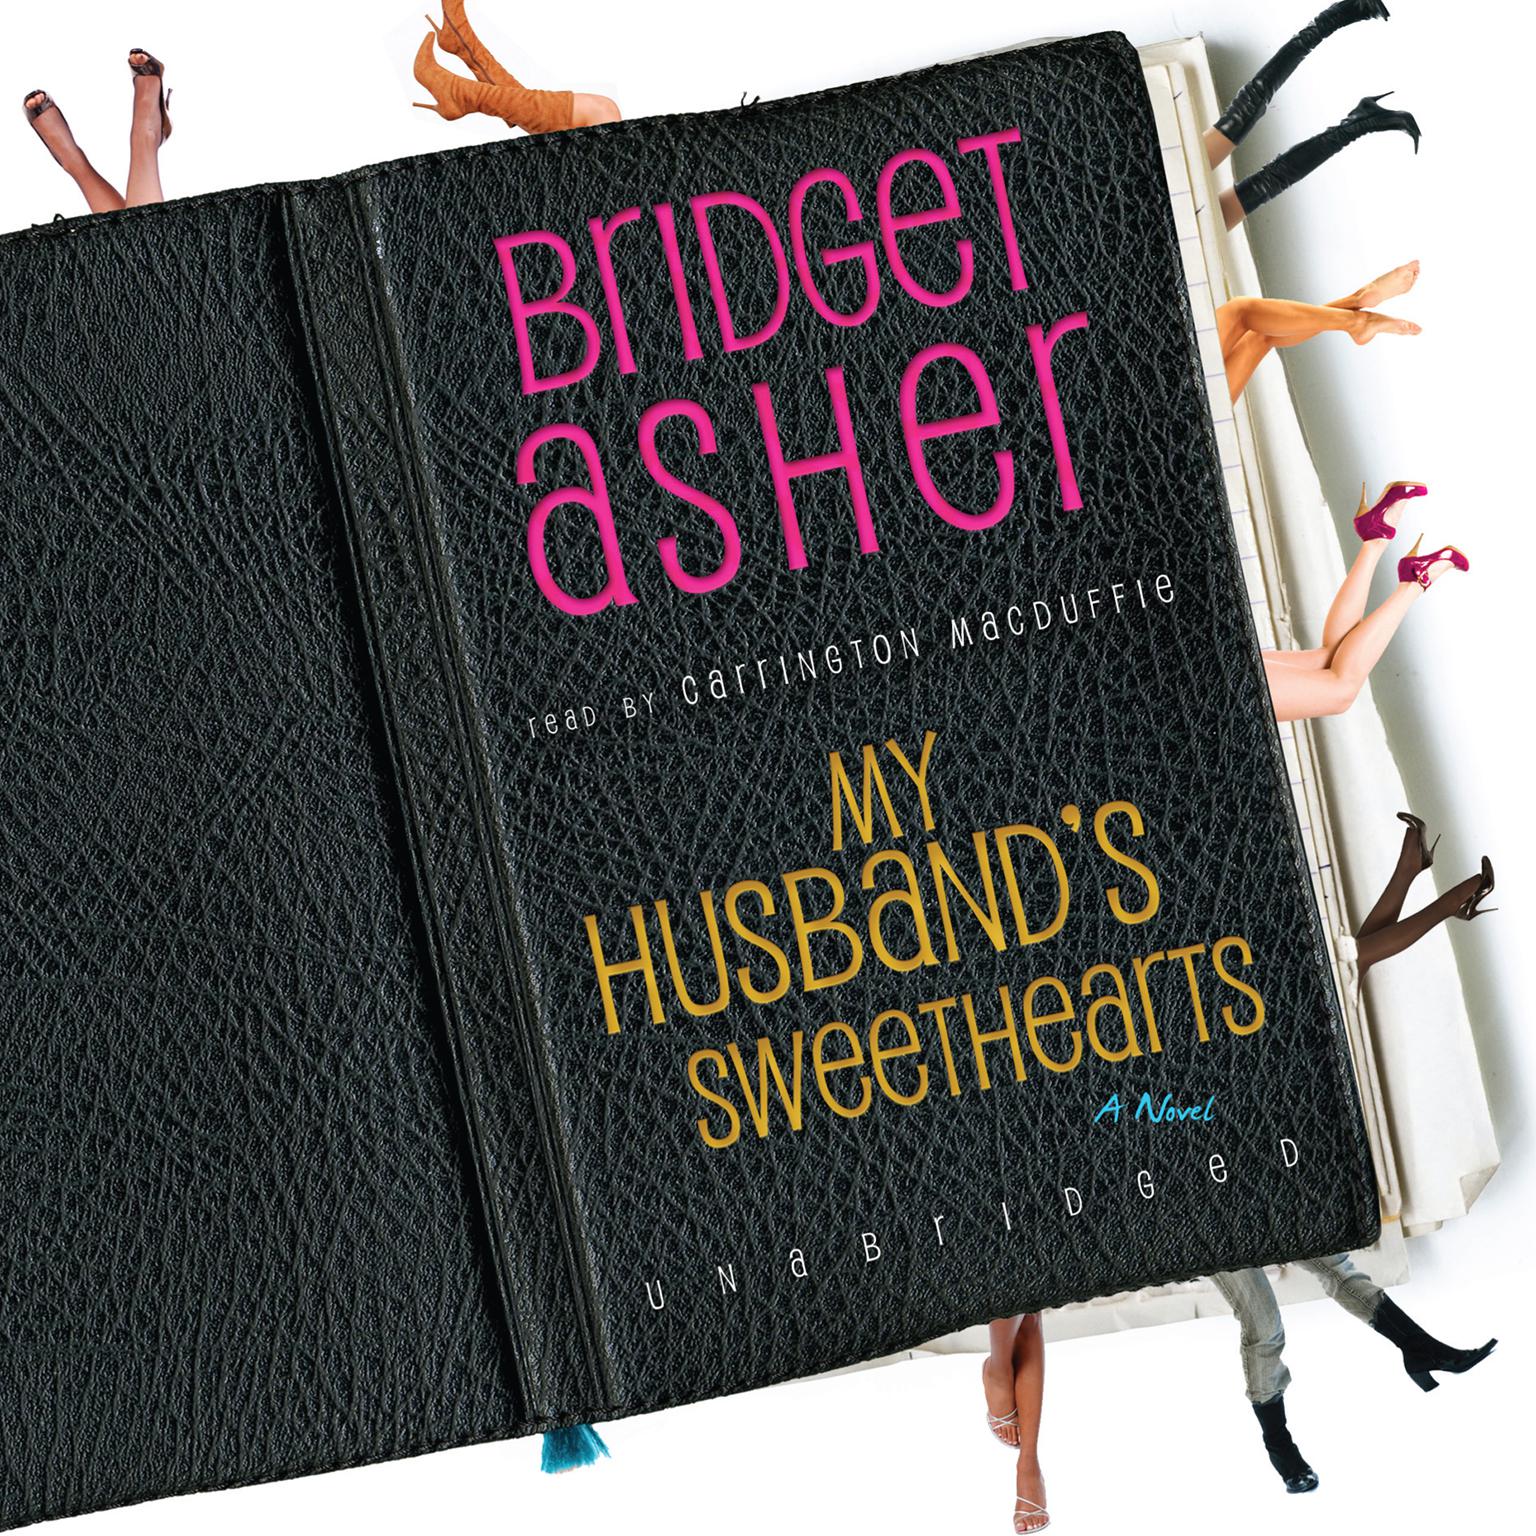 My Husband’s Sweethearts: A Novel Audiobook, by Bridget Asher